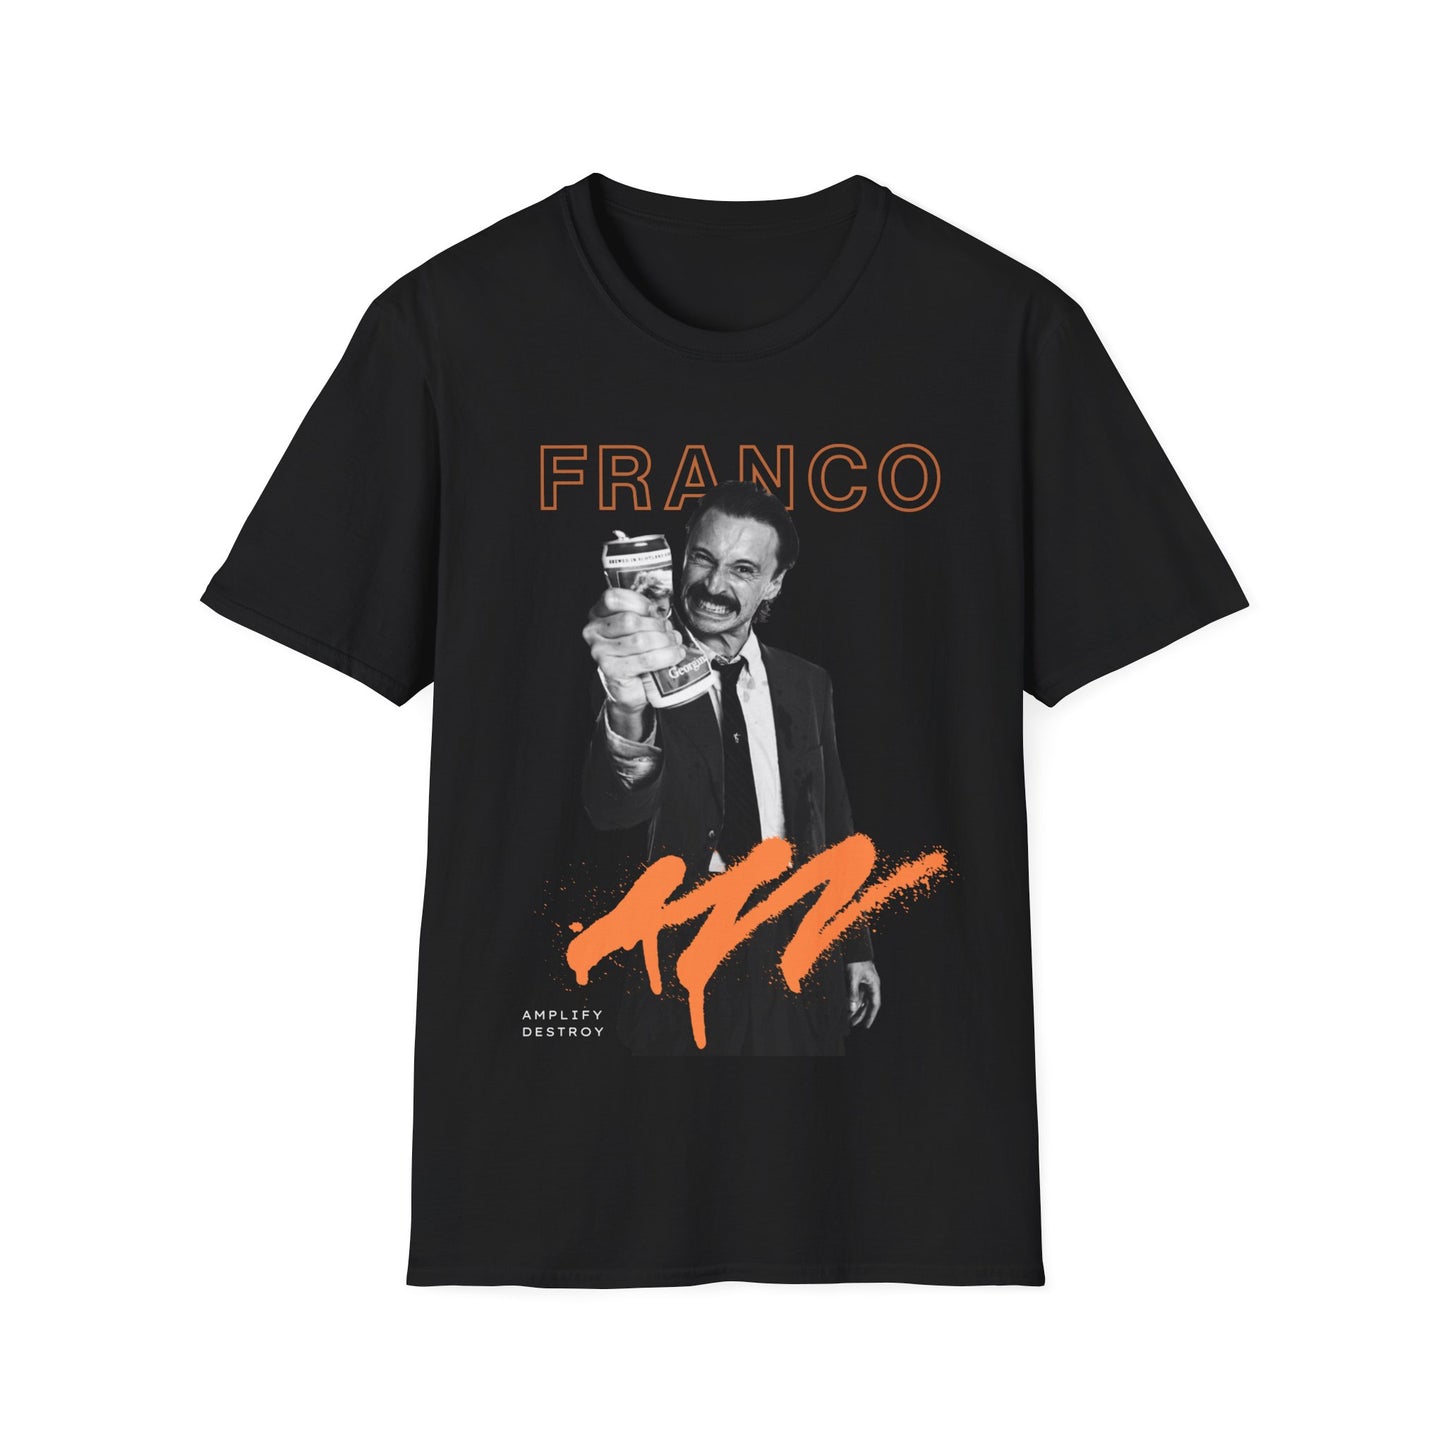 FRANCO Classic Fit AmplifyDestroy Print Tee Shirt Begbie Trainspotting 90s Brit Movie